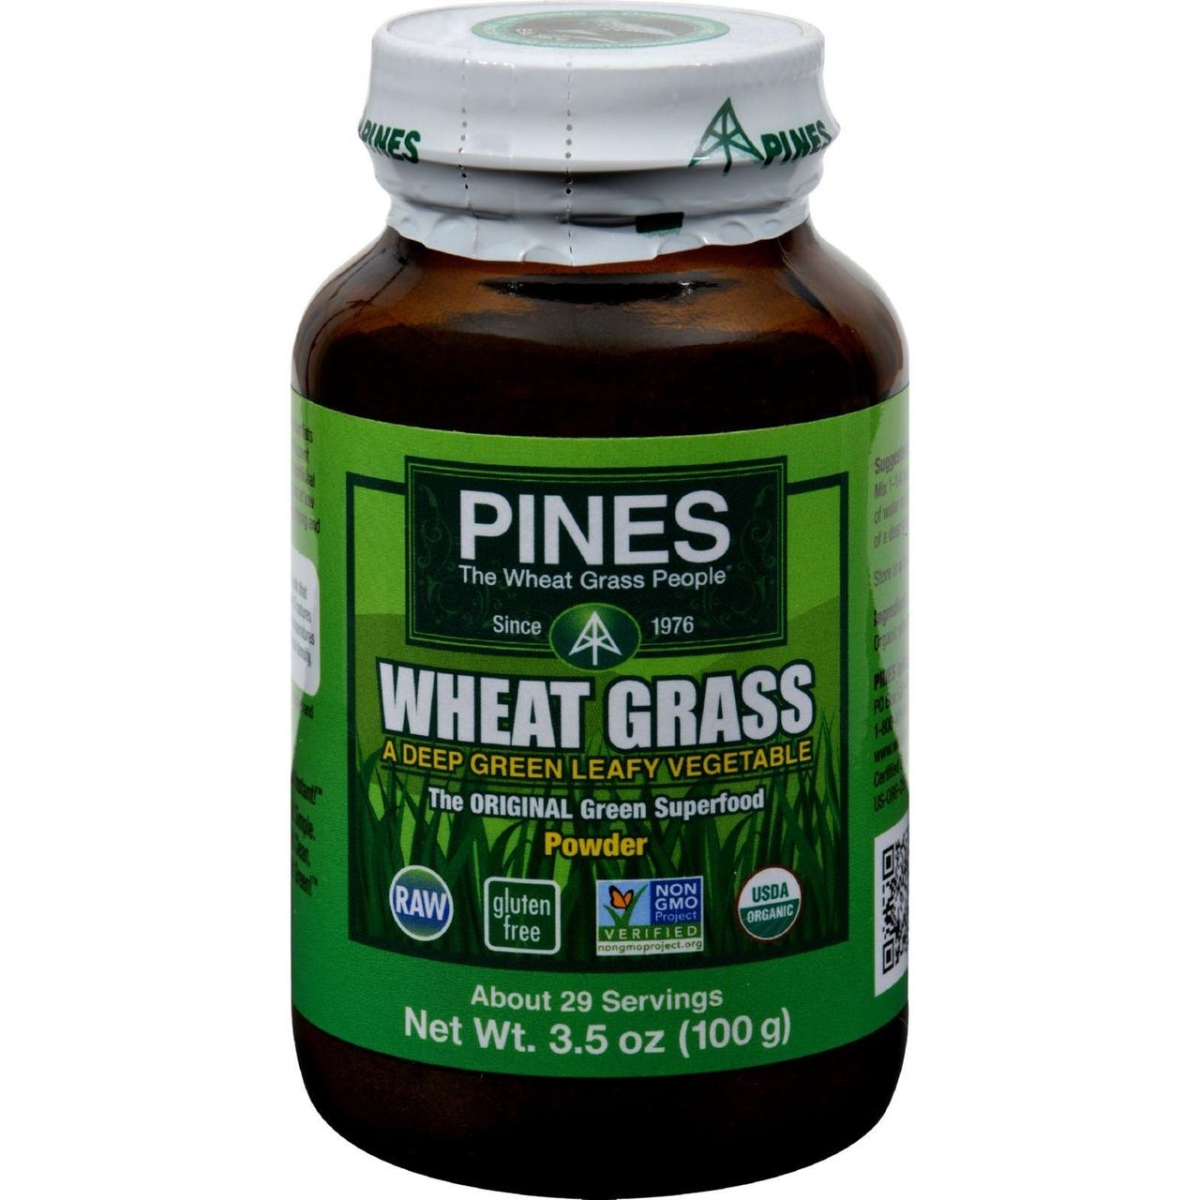 Hg0832022 3.5 Oz Wheat Grass Powder